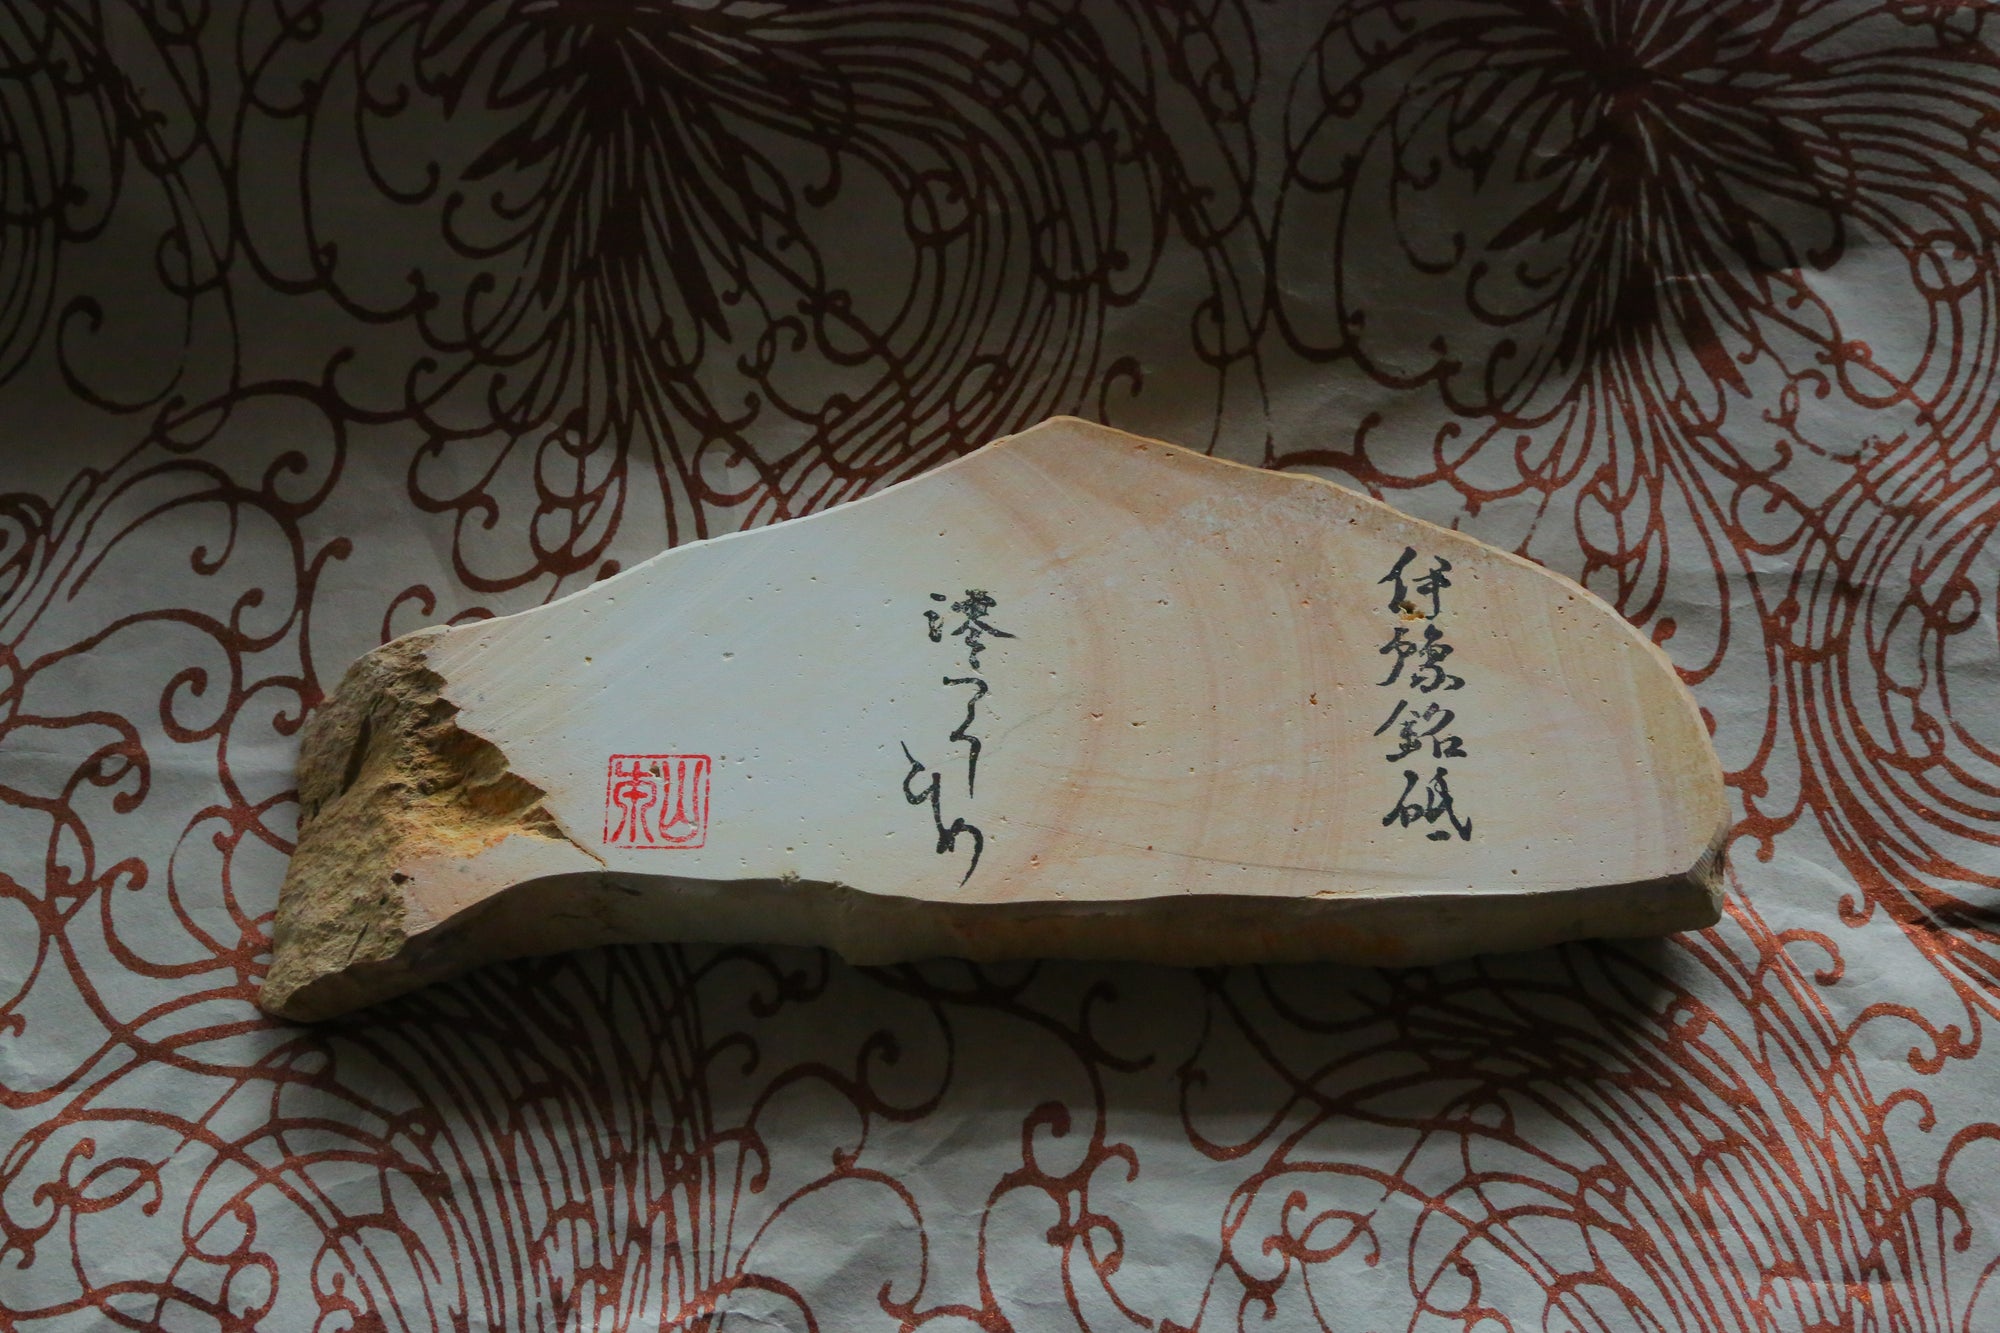 Iyo-Meito, "Kouhaku" red and white ring